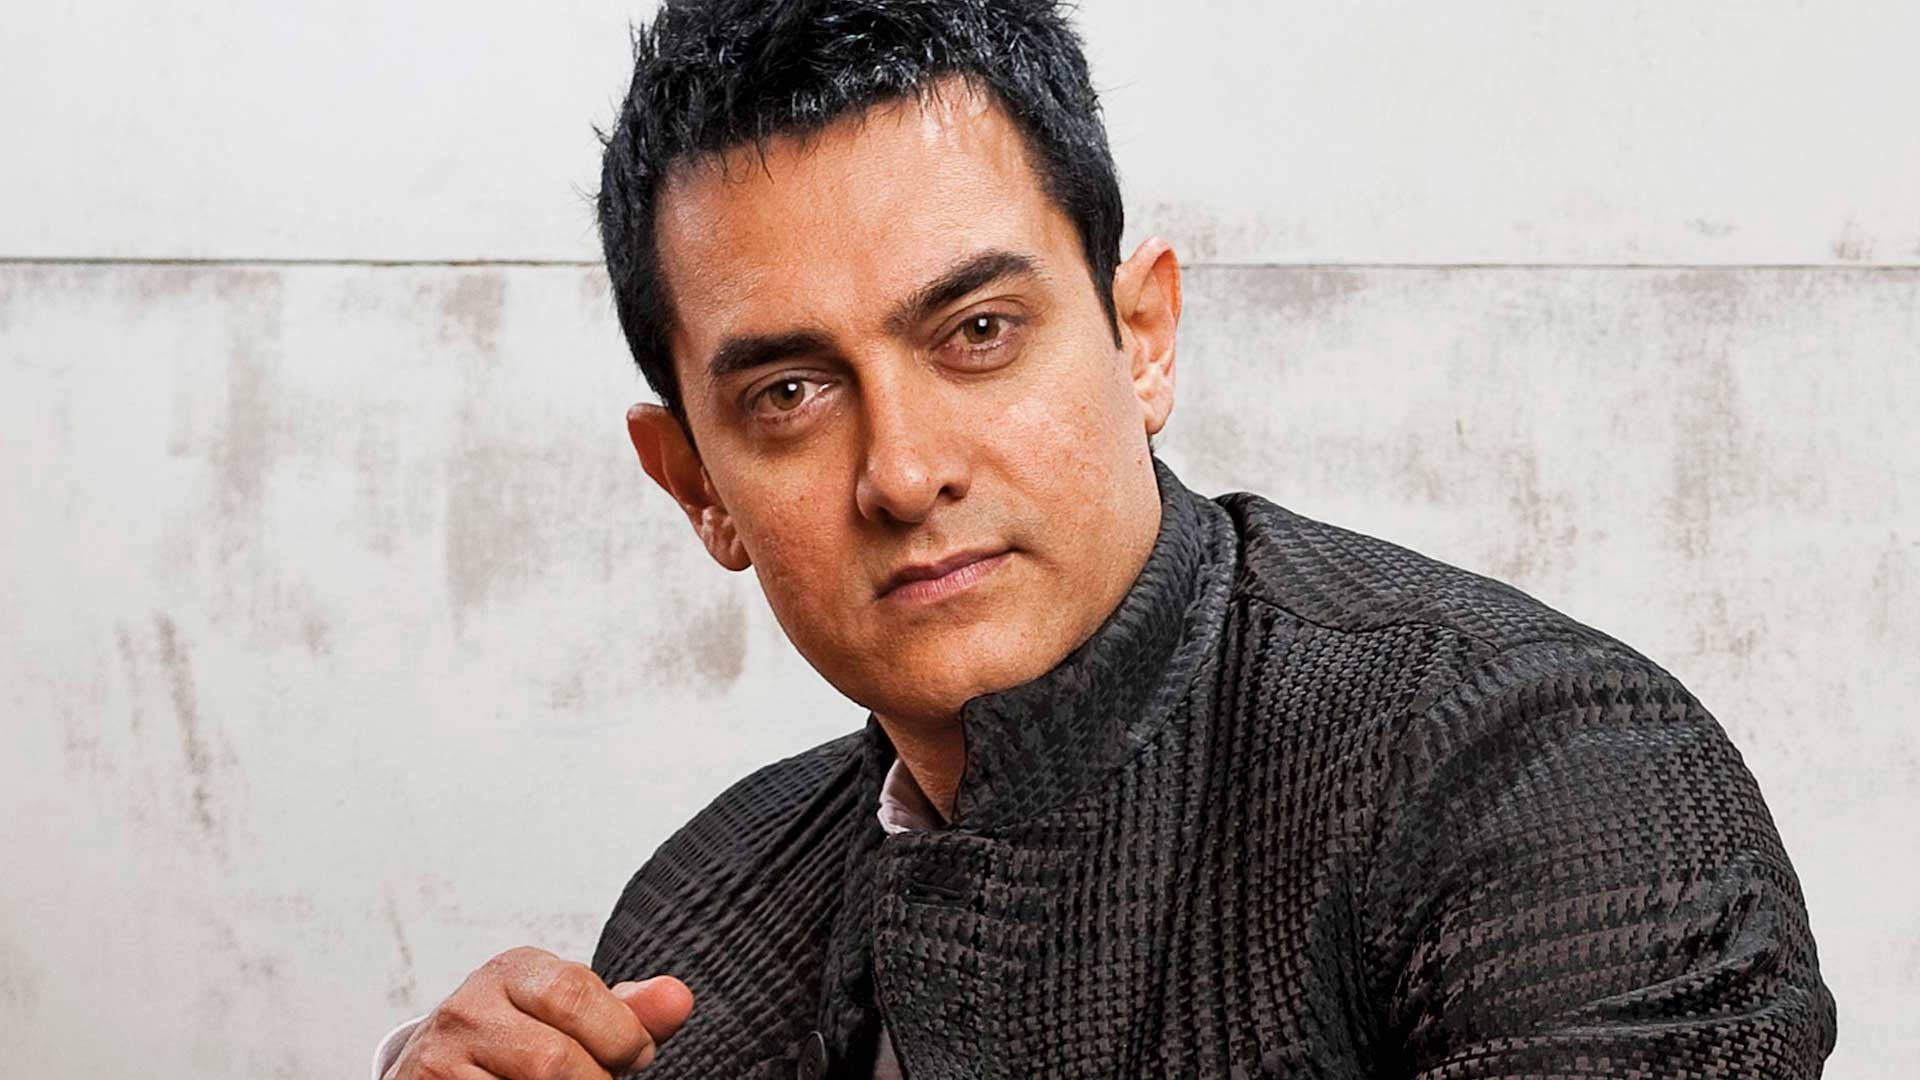 Aamir Khan Wallpapers